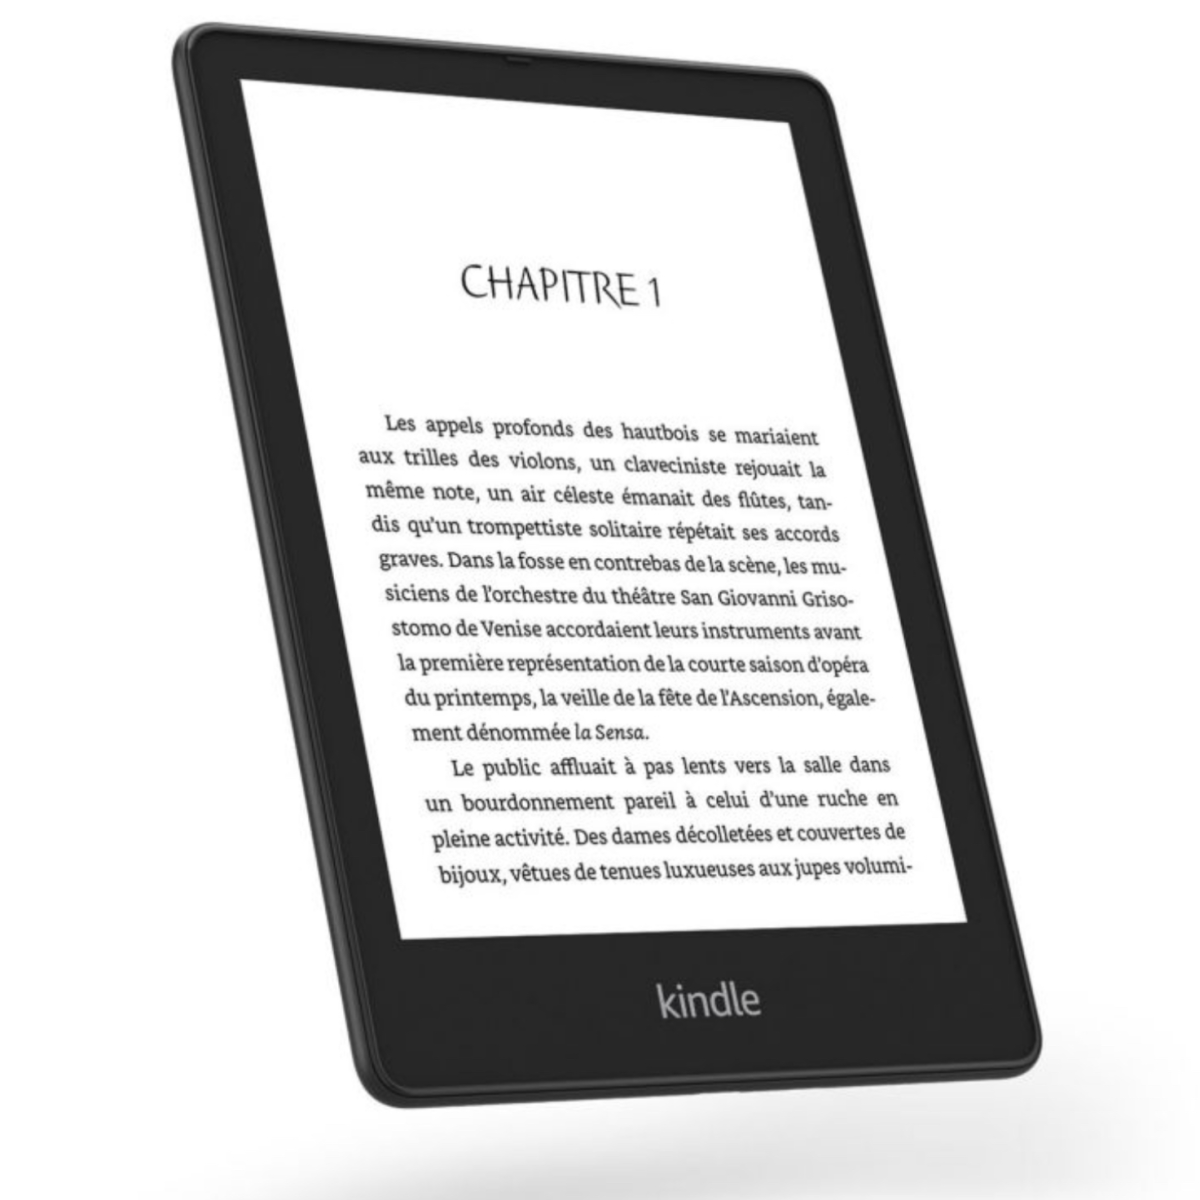 Amazon Kindle Paperwhite 5